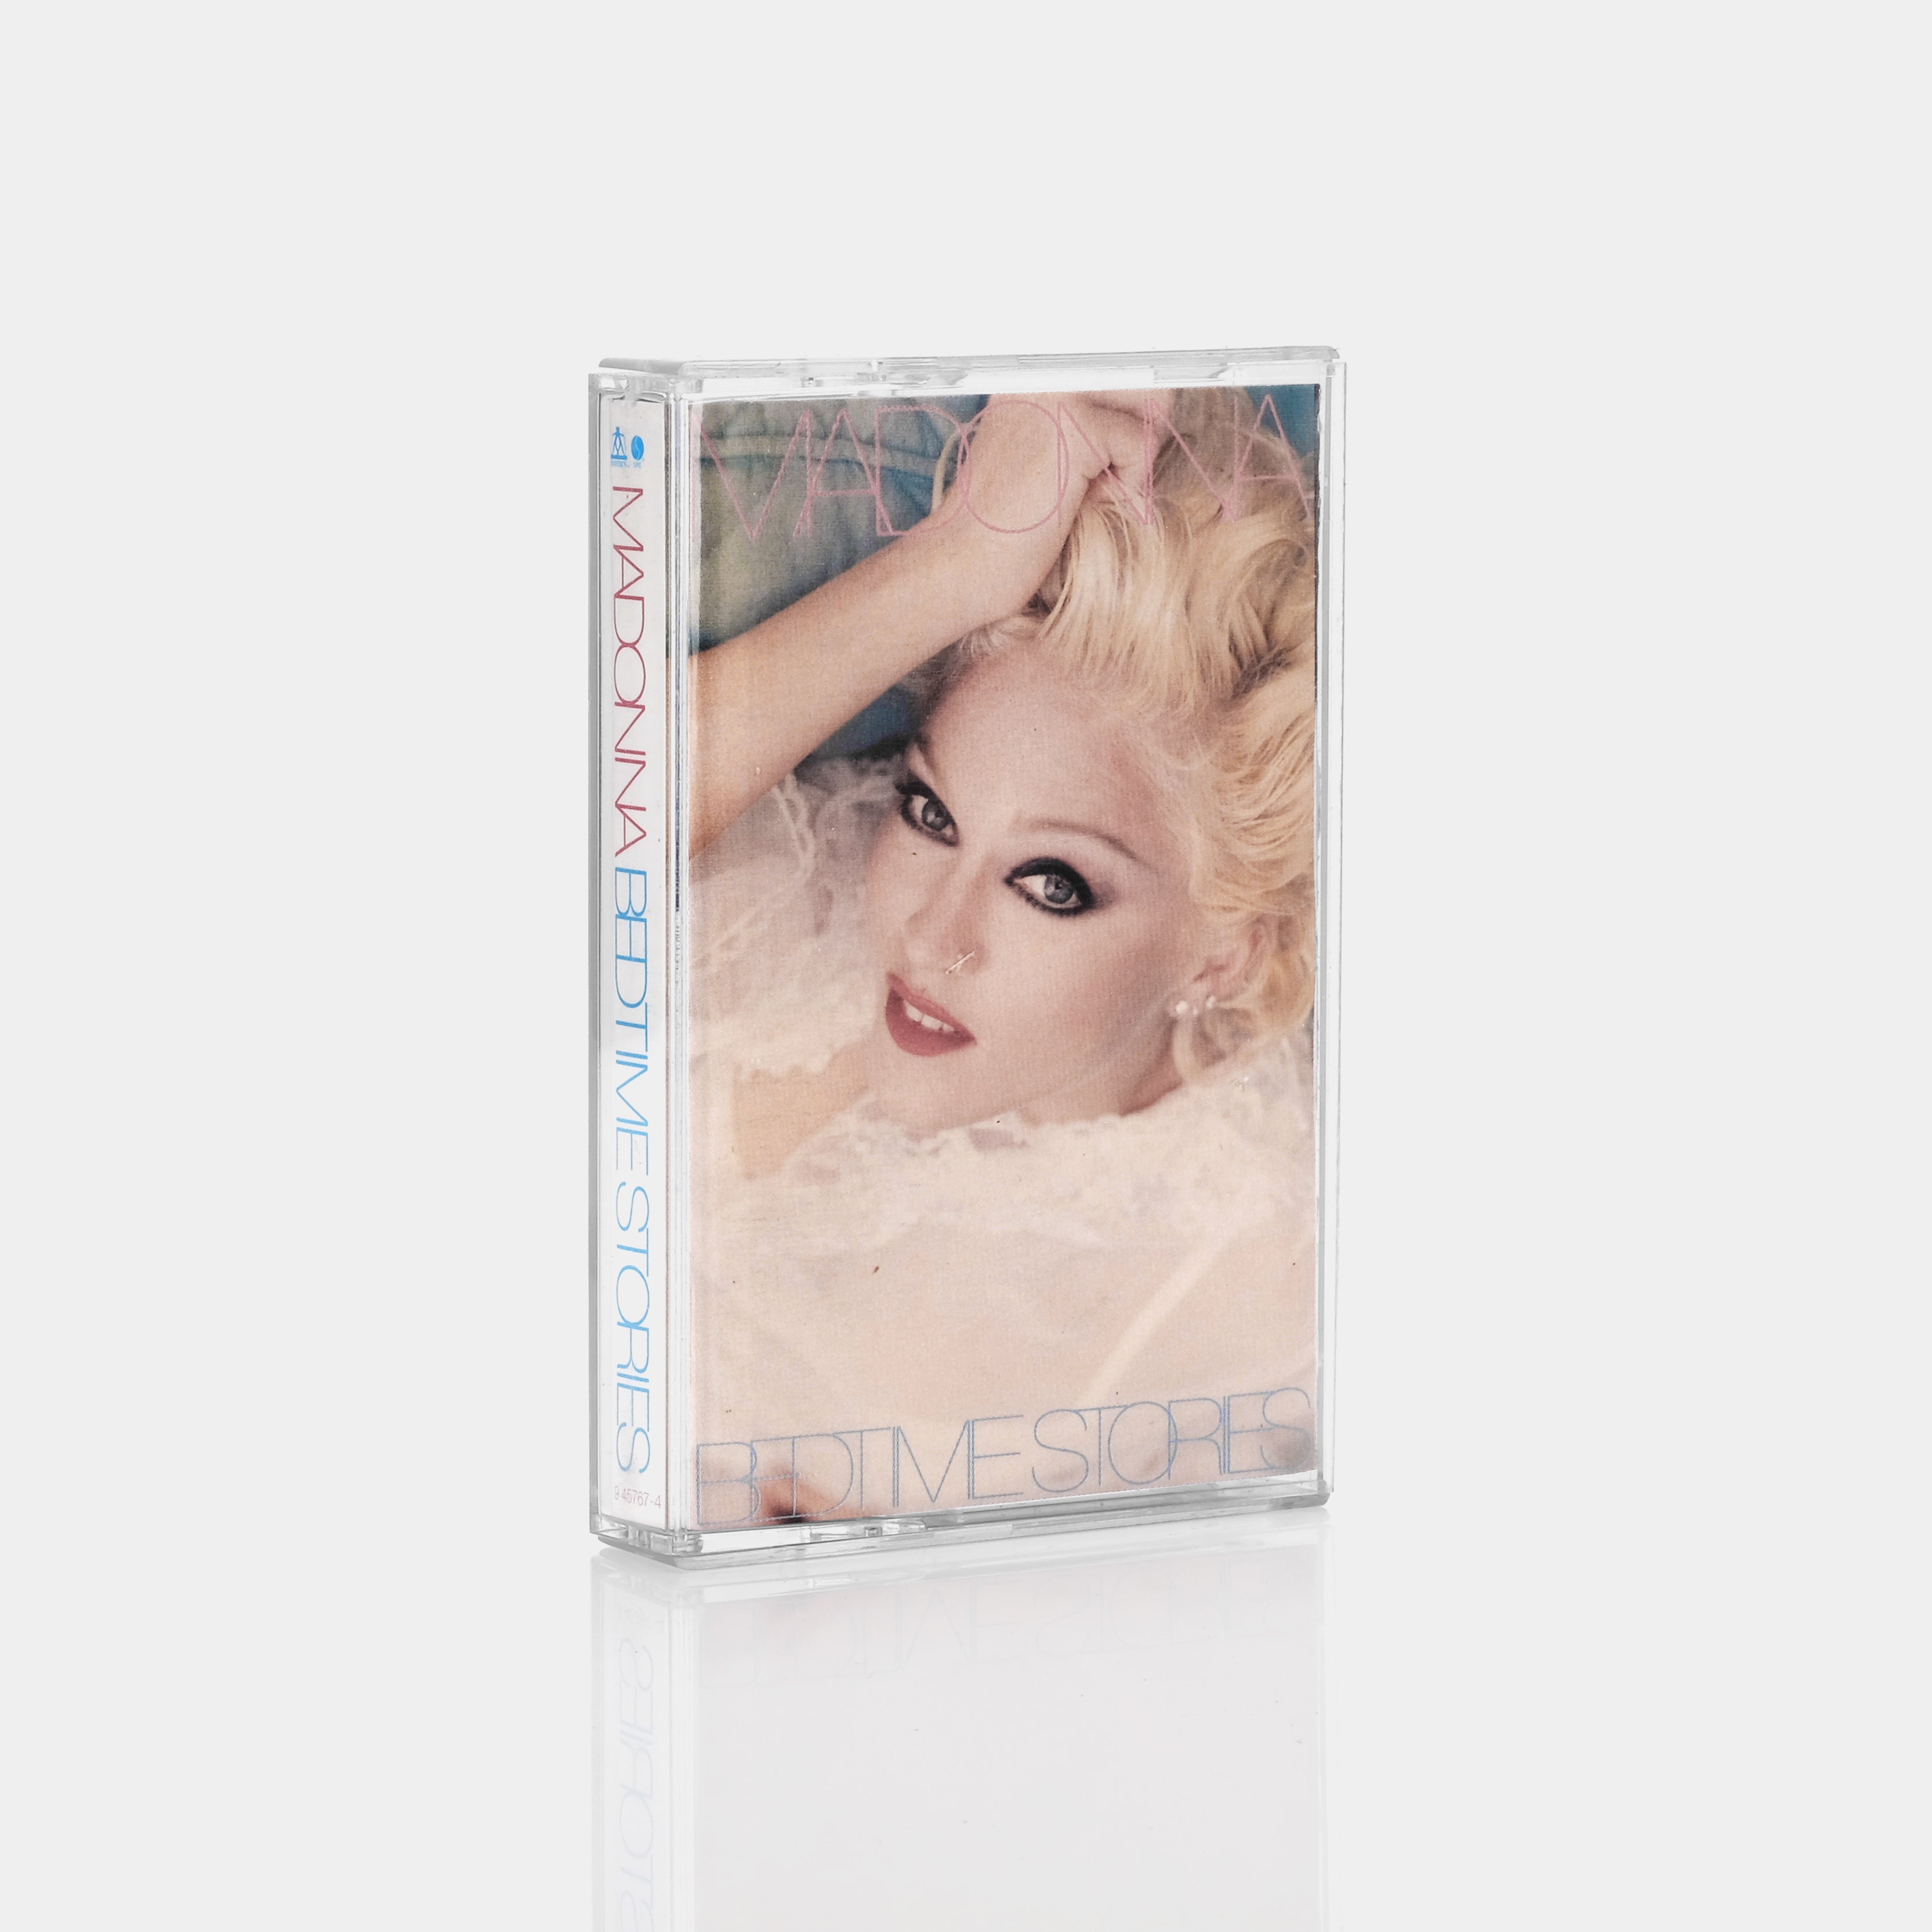 Madonna - Bedtime Stories Cassette Tape